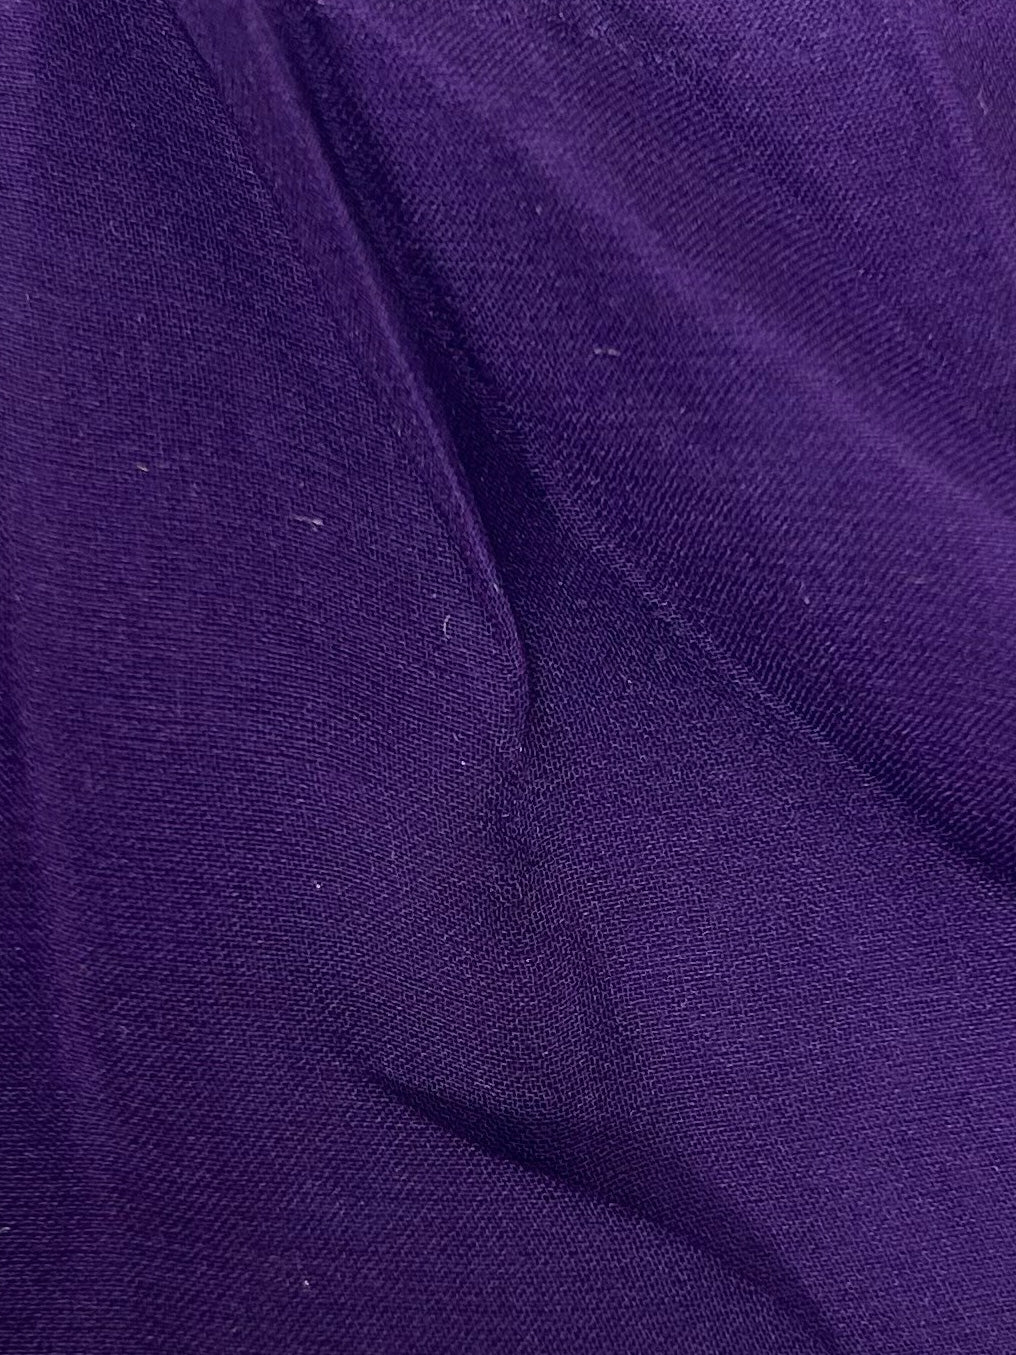 Purple Silk Chiffon - Tempest